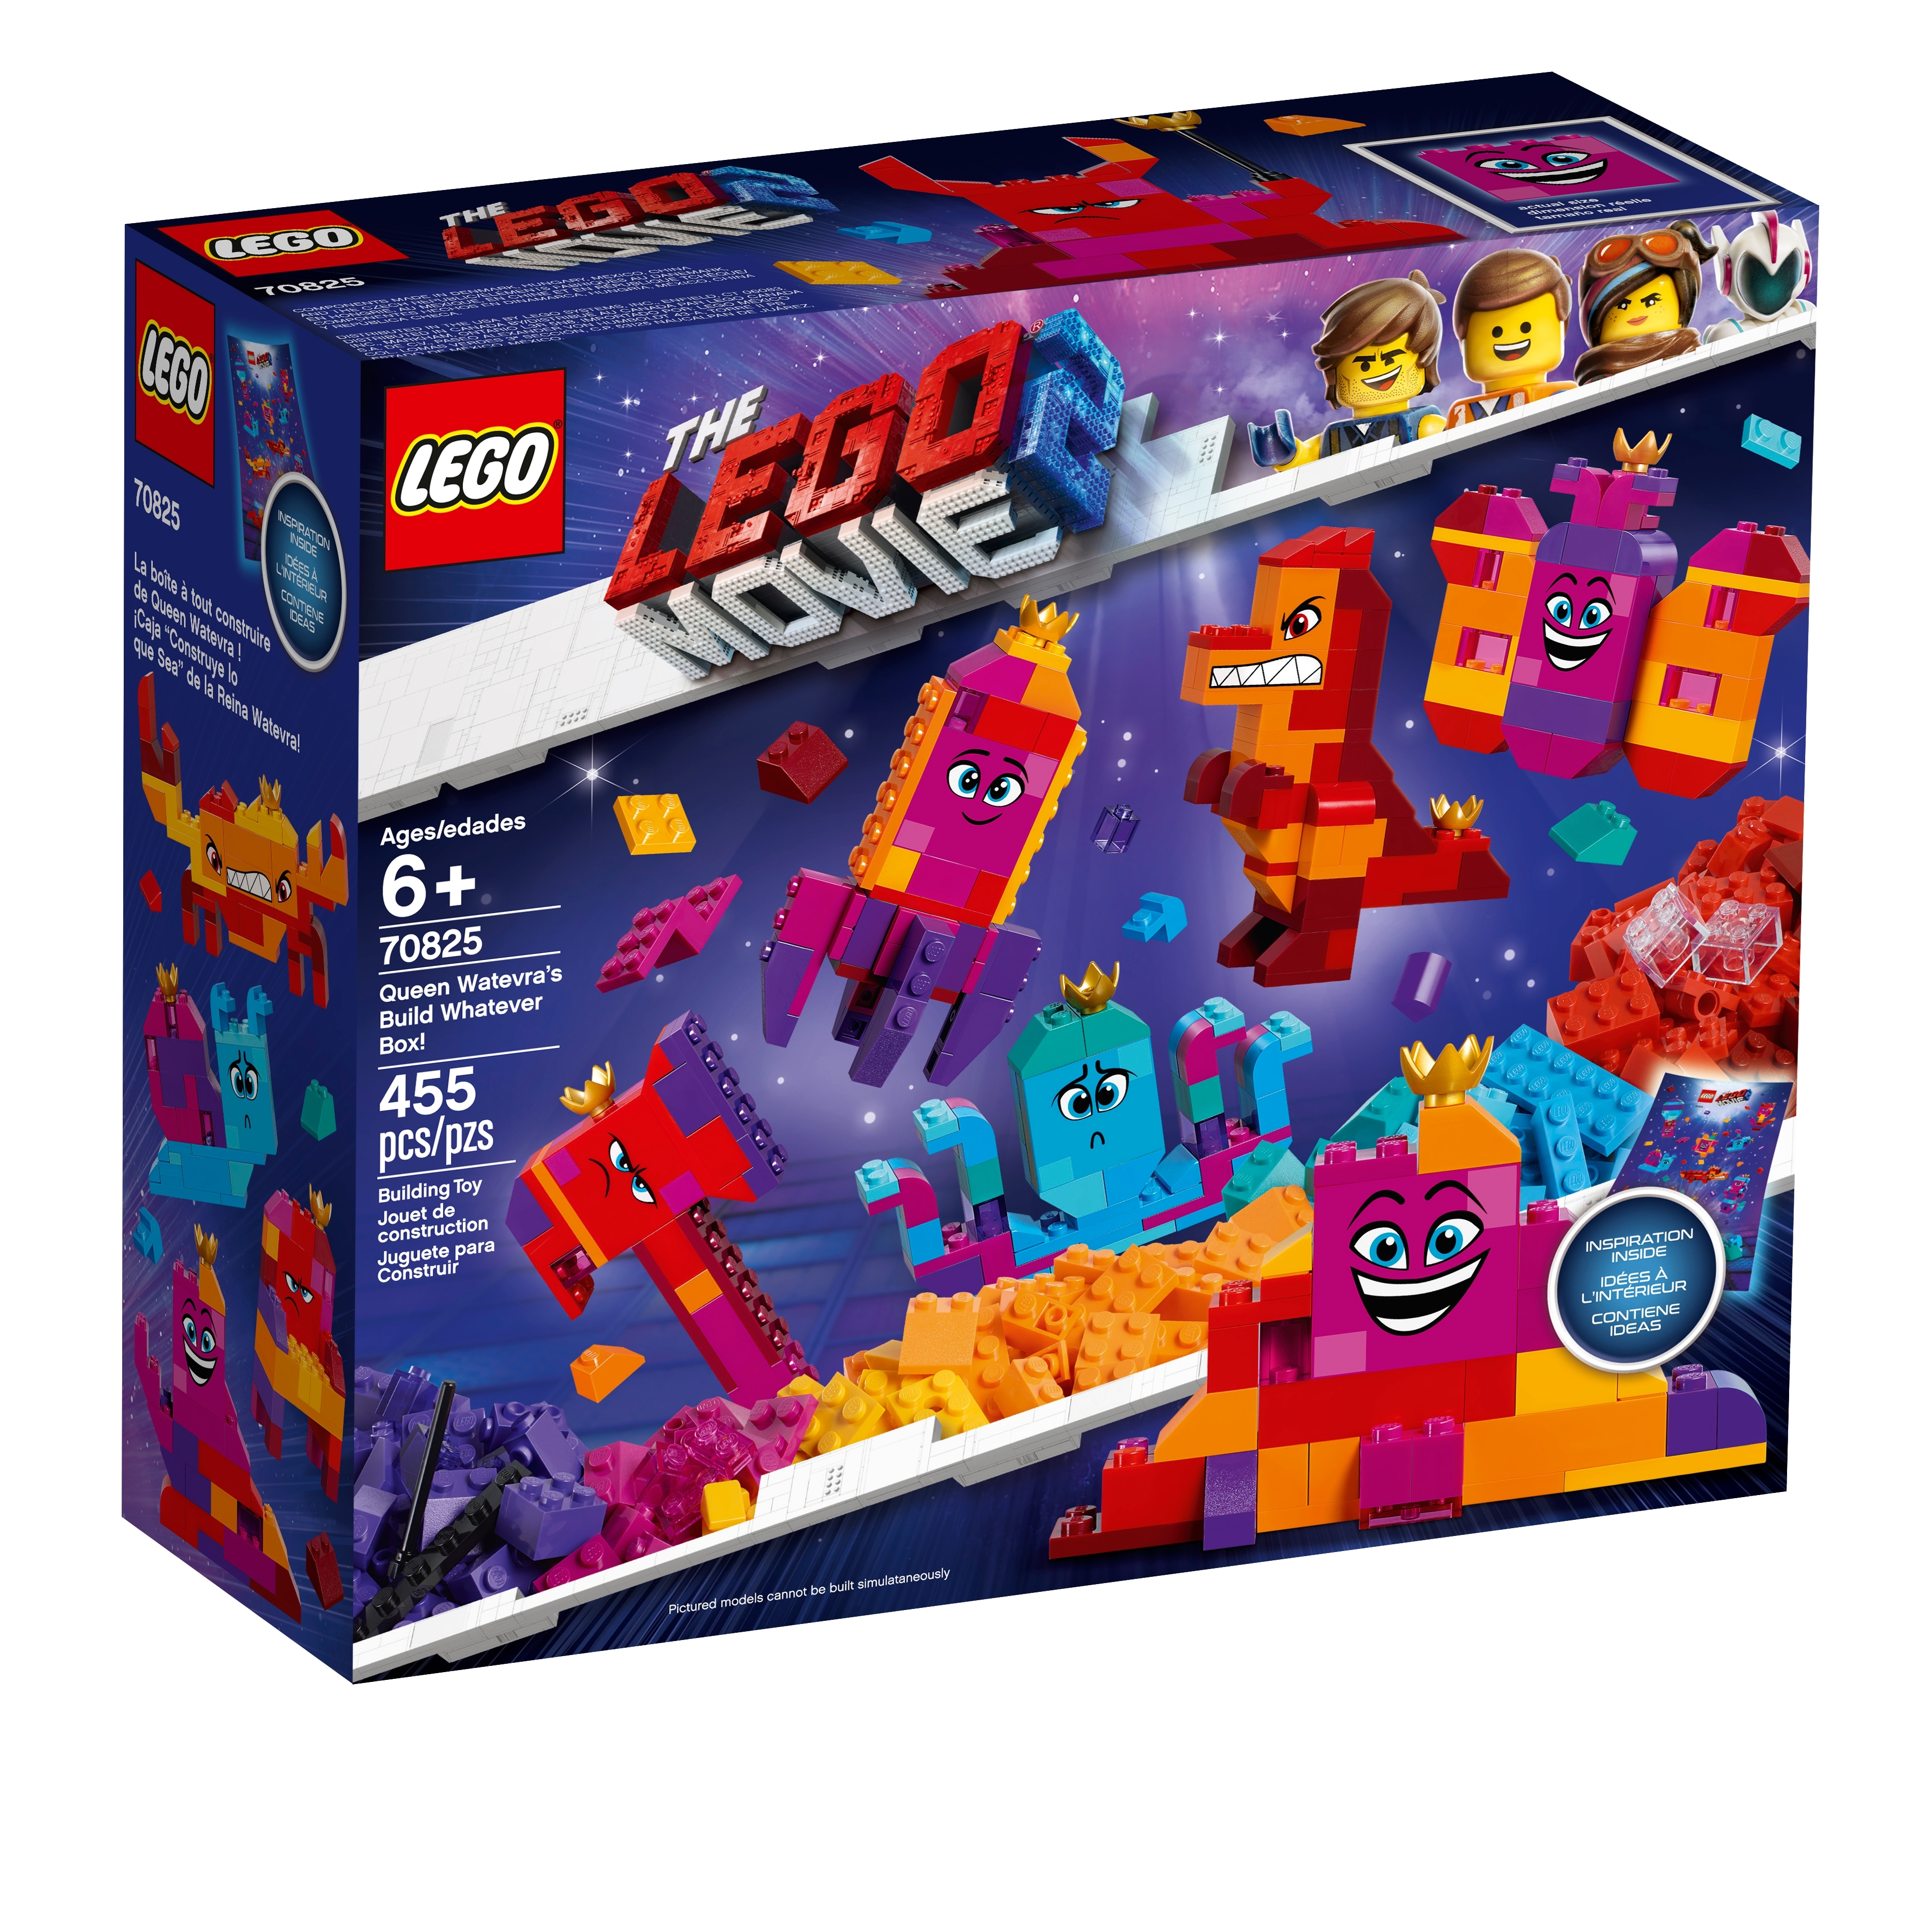 Queen Watevra's Build Whatever Box! 70825 | THE LEGO® MOVIE 2